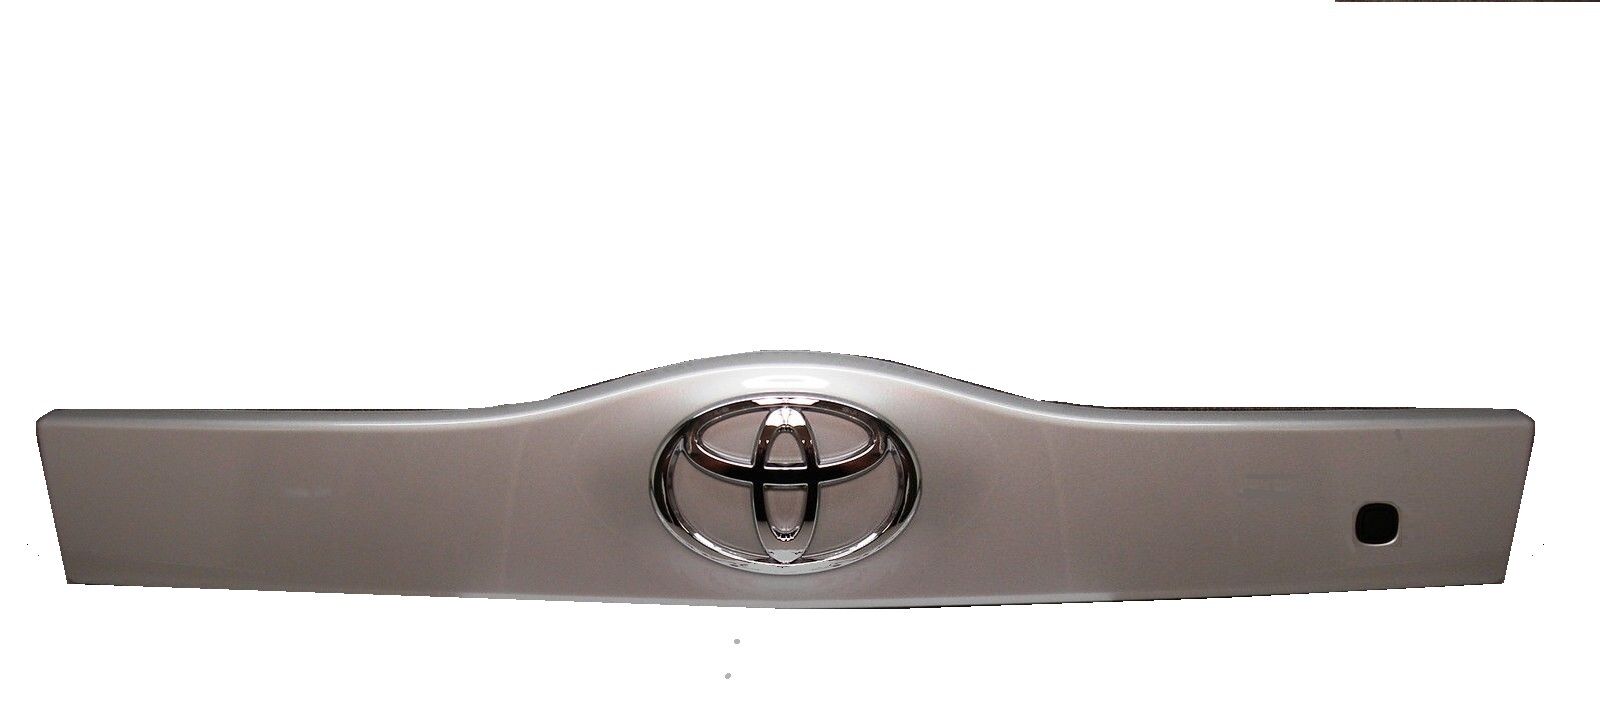 Toyota Prius Classic Silver Lift Gate Garnish Handle Trim OEM OE NEW